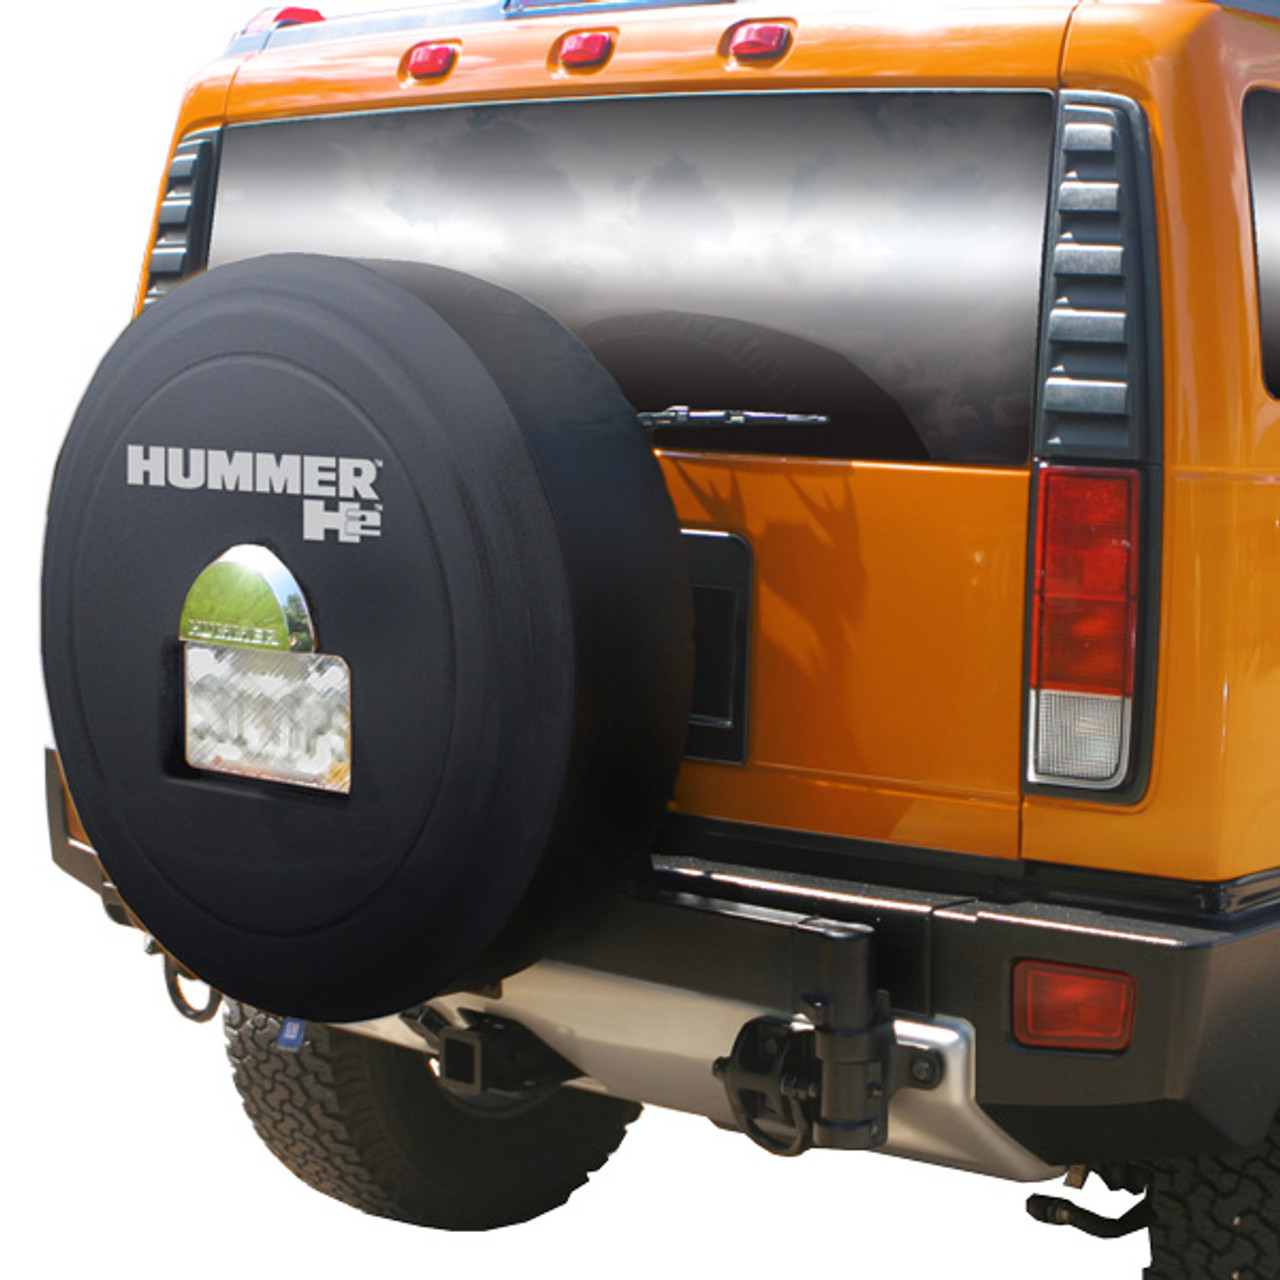 Boomerang 2002-2004 Hummer H2 Soft Tire Cover Non-Reflective Genui - 1